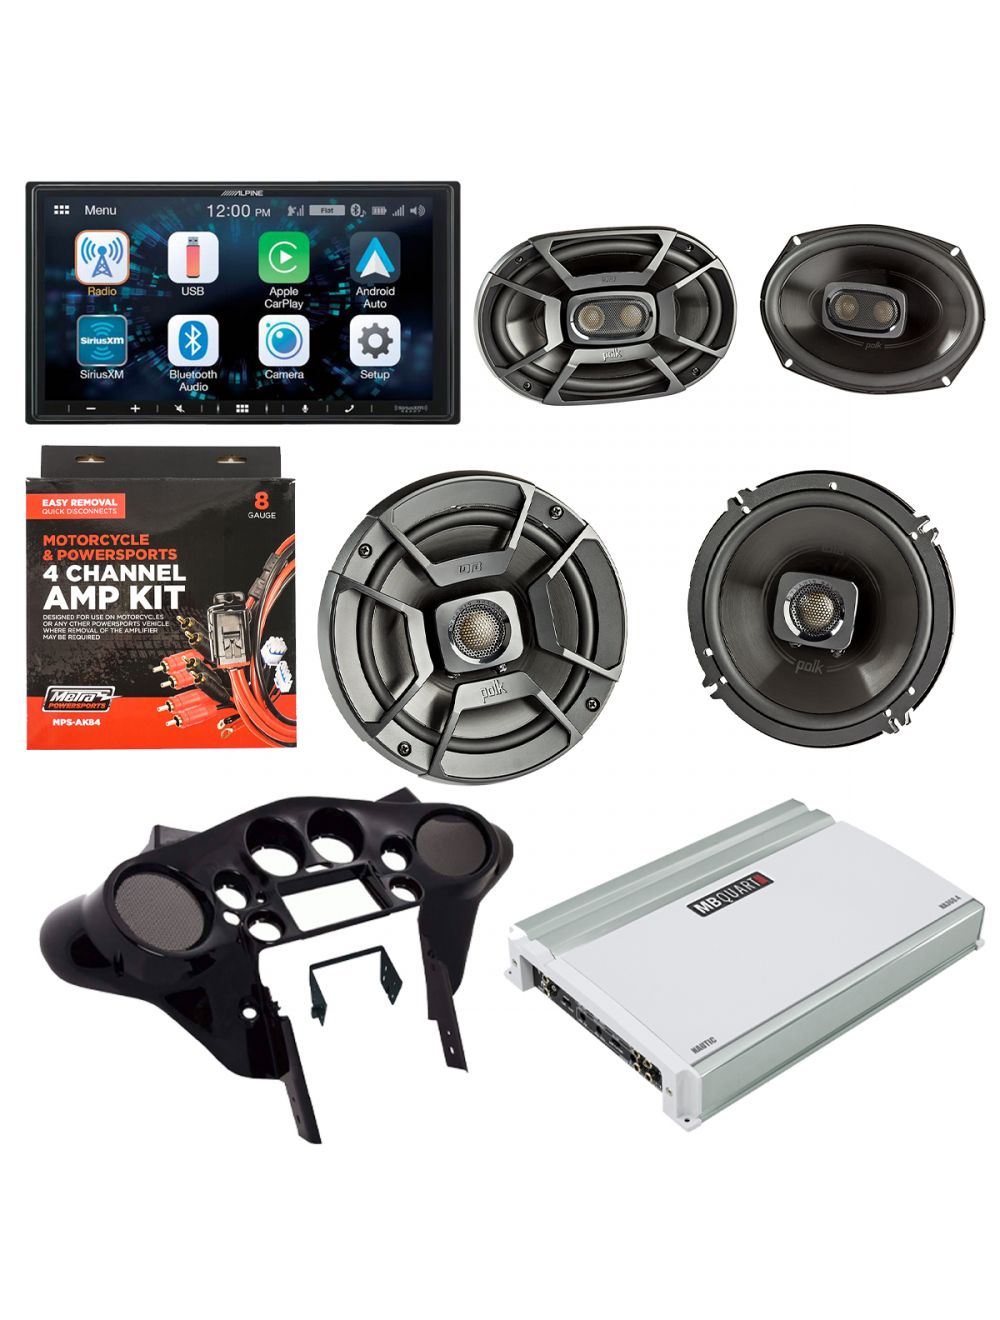 Alpine ILX-W650 w/ Sound system for Harley Davidson (Speakers x Amp x Dash kit x Speaker saddlebag lid) Bundle